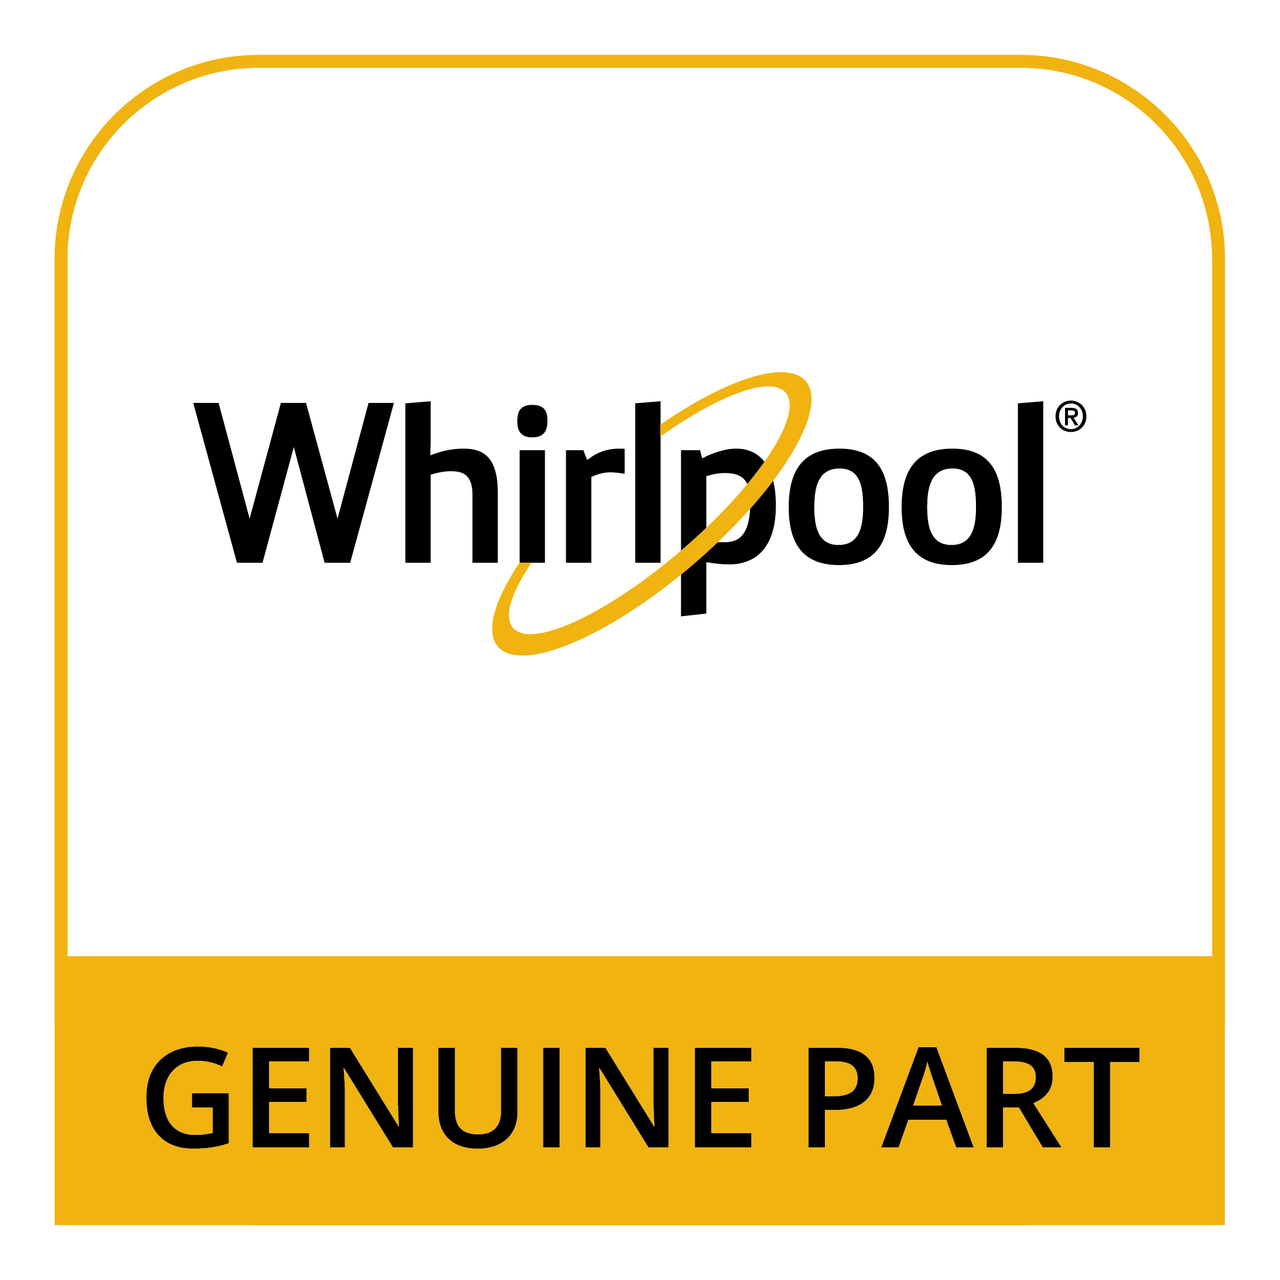 Whirlpool WFR100260 - 1 3/4" Pil *Non-Wise* - Genuine Part